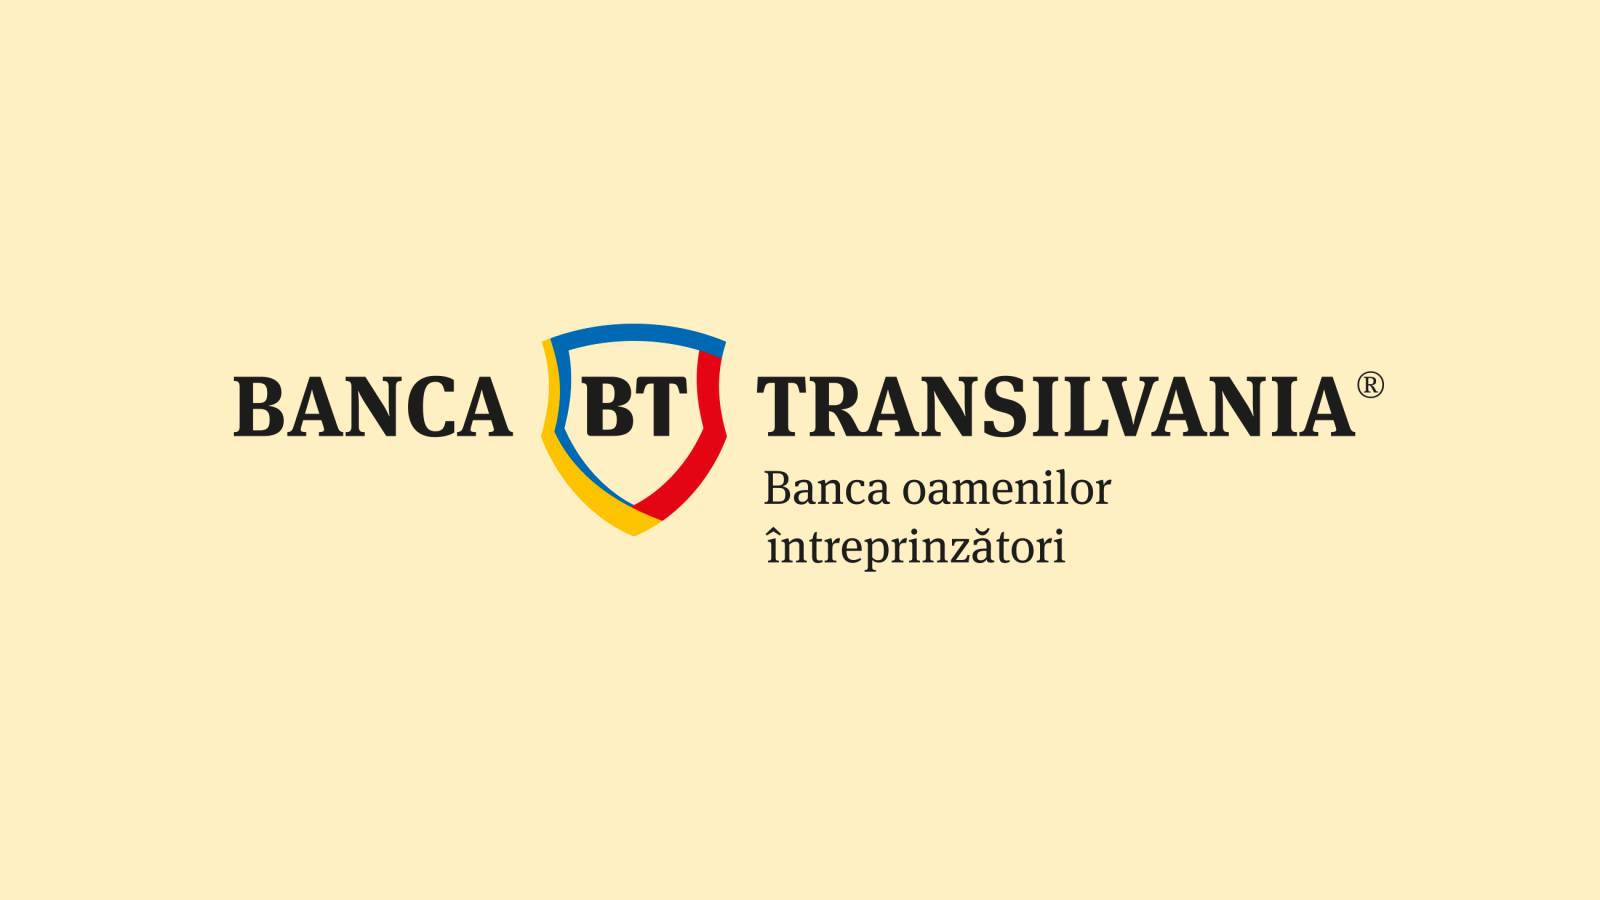 BANCA Transilvania sendet heute offiziell WICHTIGE Mitteilung an Kunden